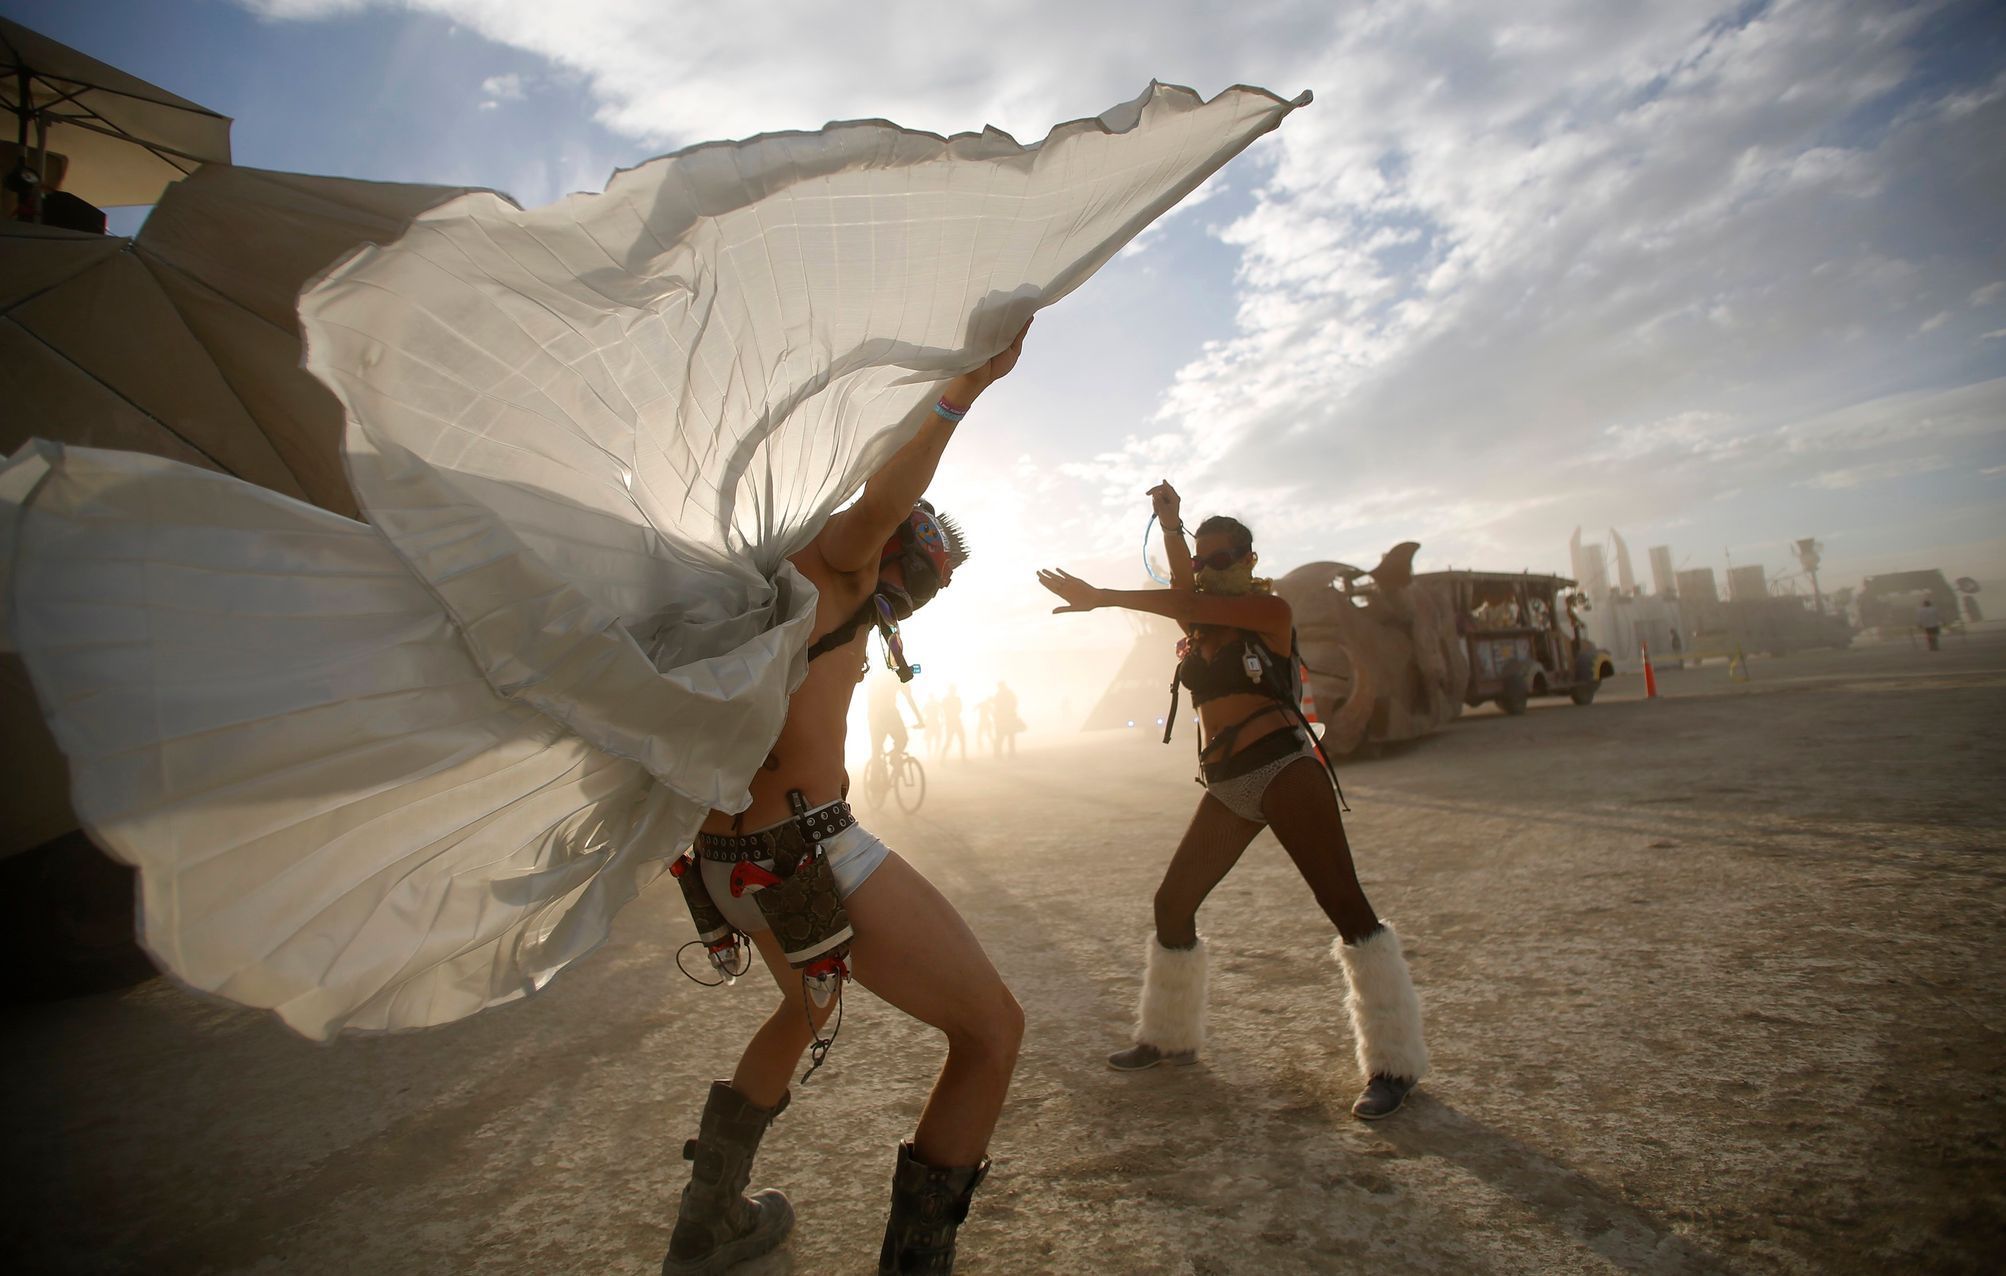 Dillon Bracken and Atalya Stachel dance during the Burning Man 2014 &quot;Caravansary&quot; arts and music festival in the Black Rock Desert of Nevada